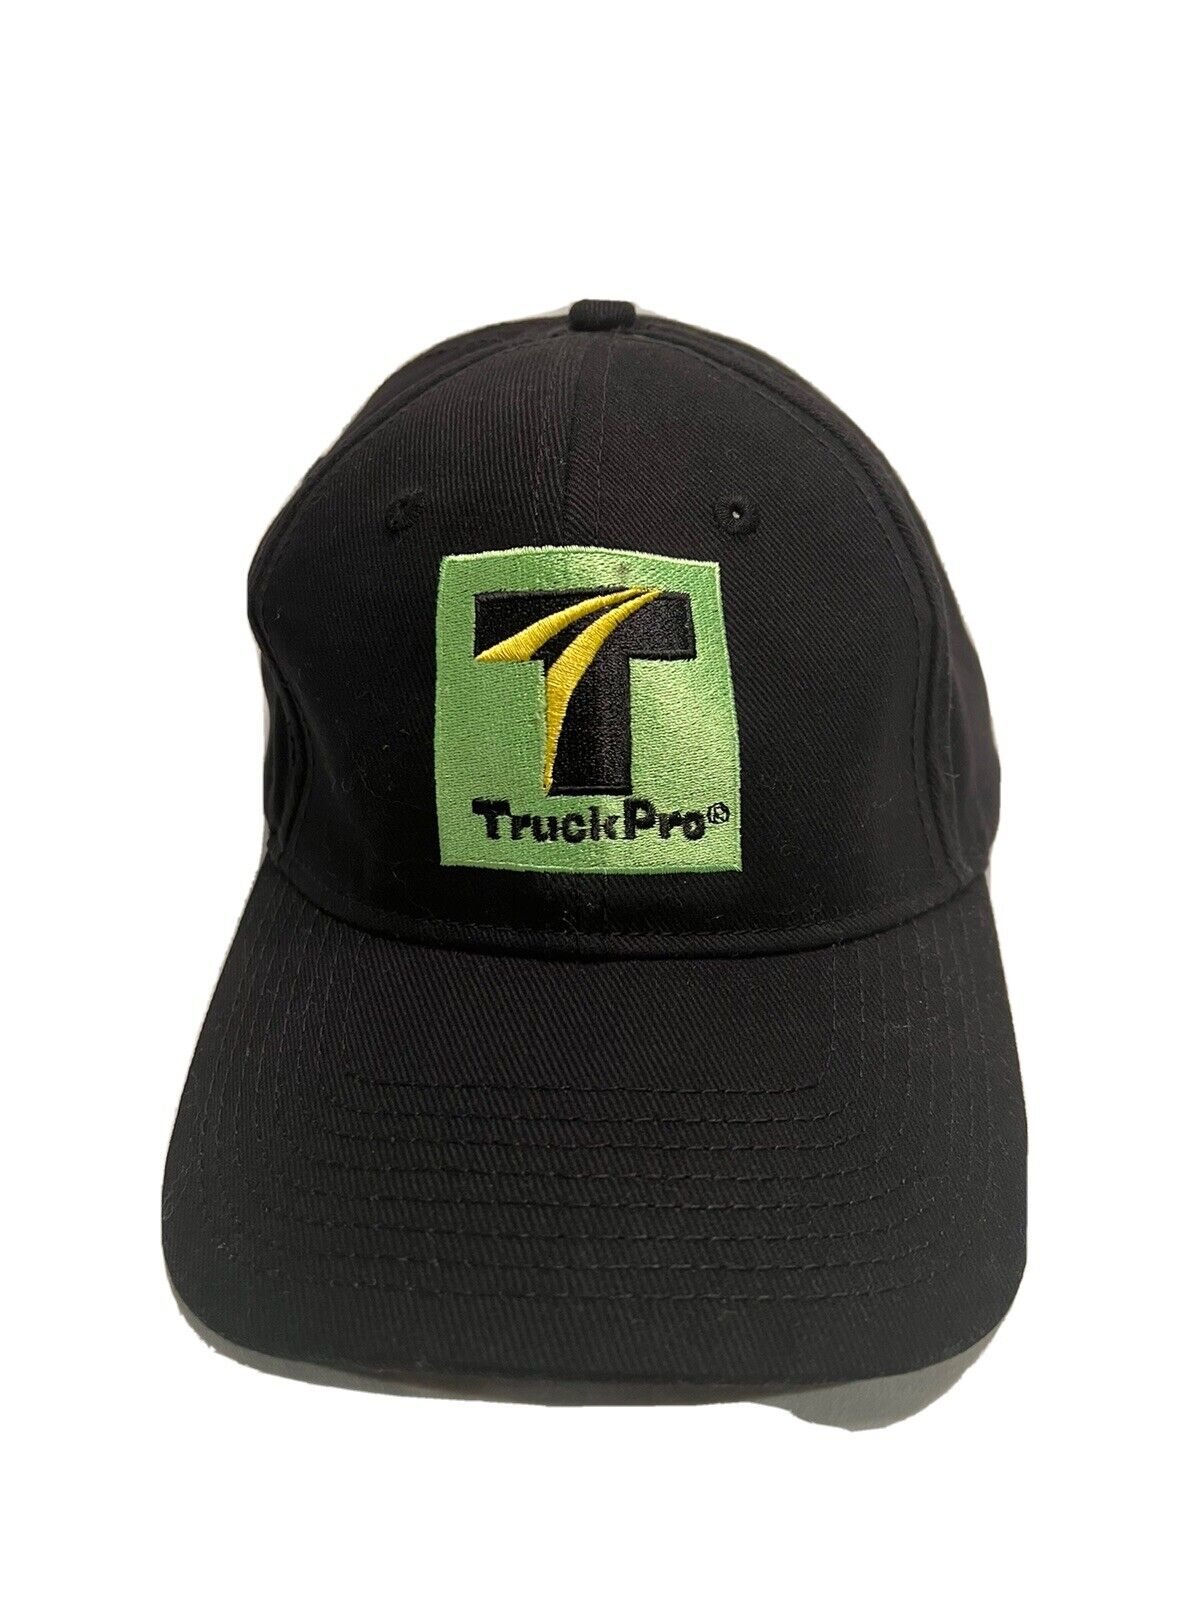 Clasic Black Truck Pro Adjustable Strap Back Trucker Hat